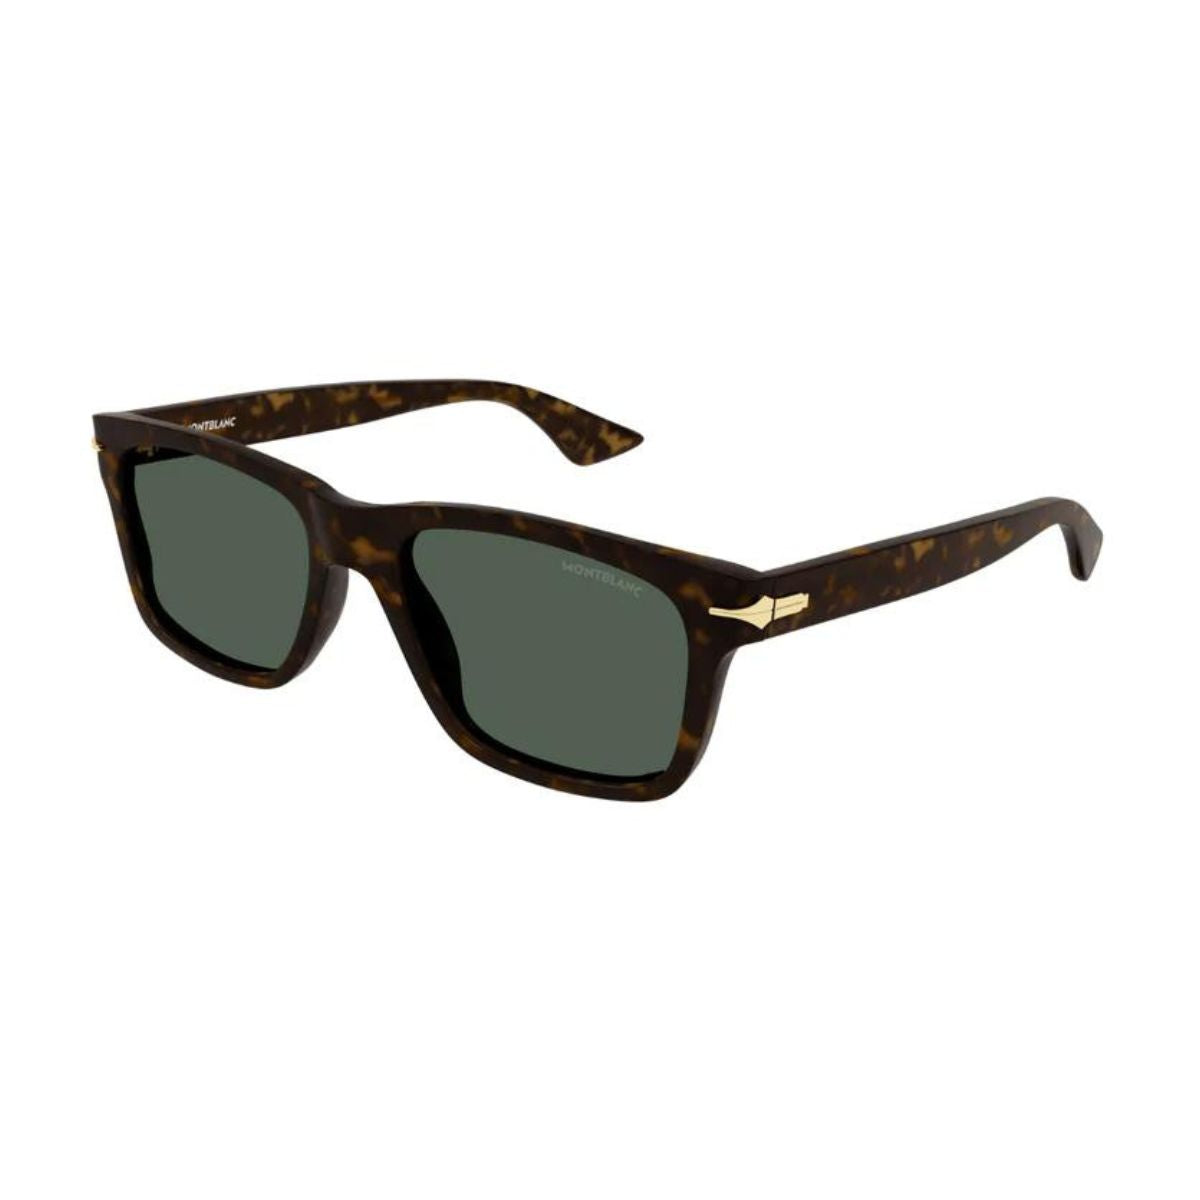 " Montblanc 0263/S 002 Black Havana Square Sunglasses for Men at Optorium - Black havana frame, green polycarbonate lenses, full-rim square design."